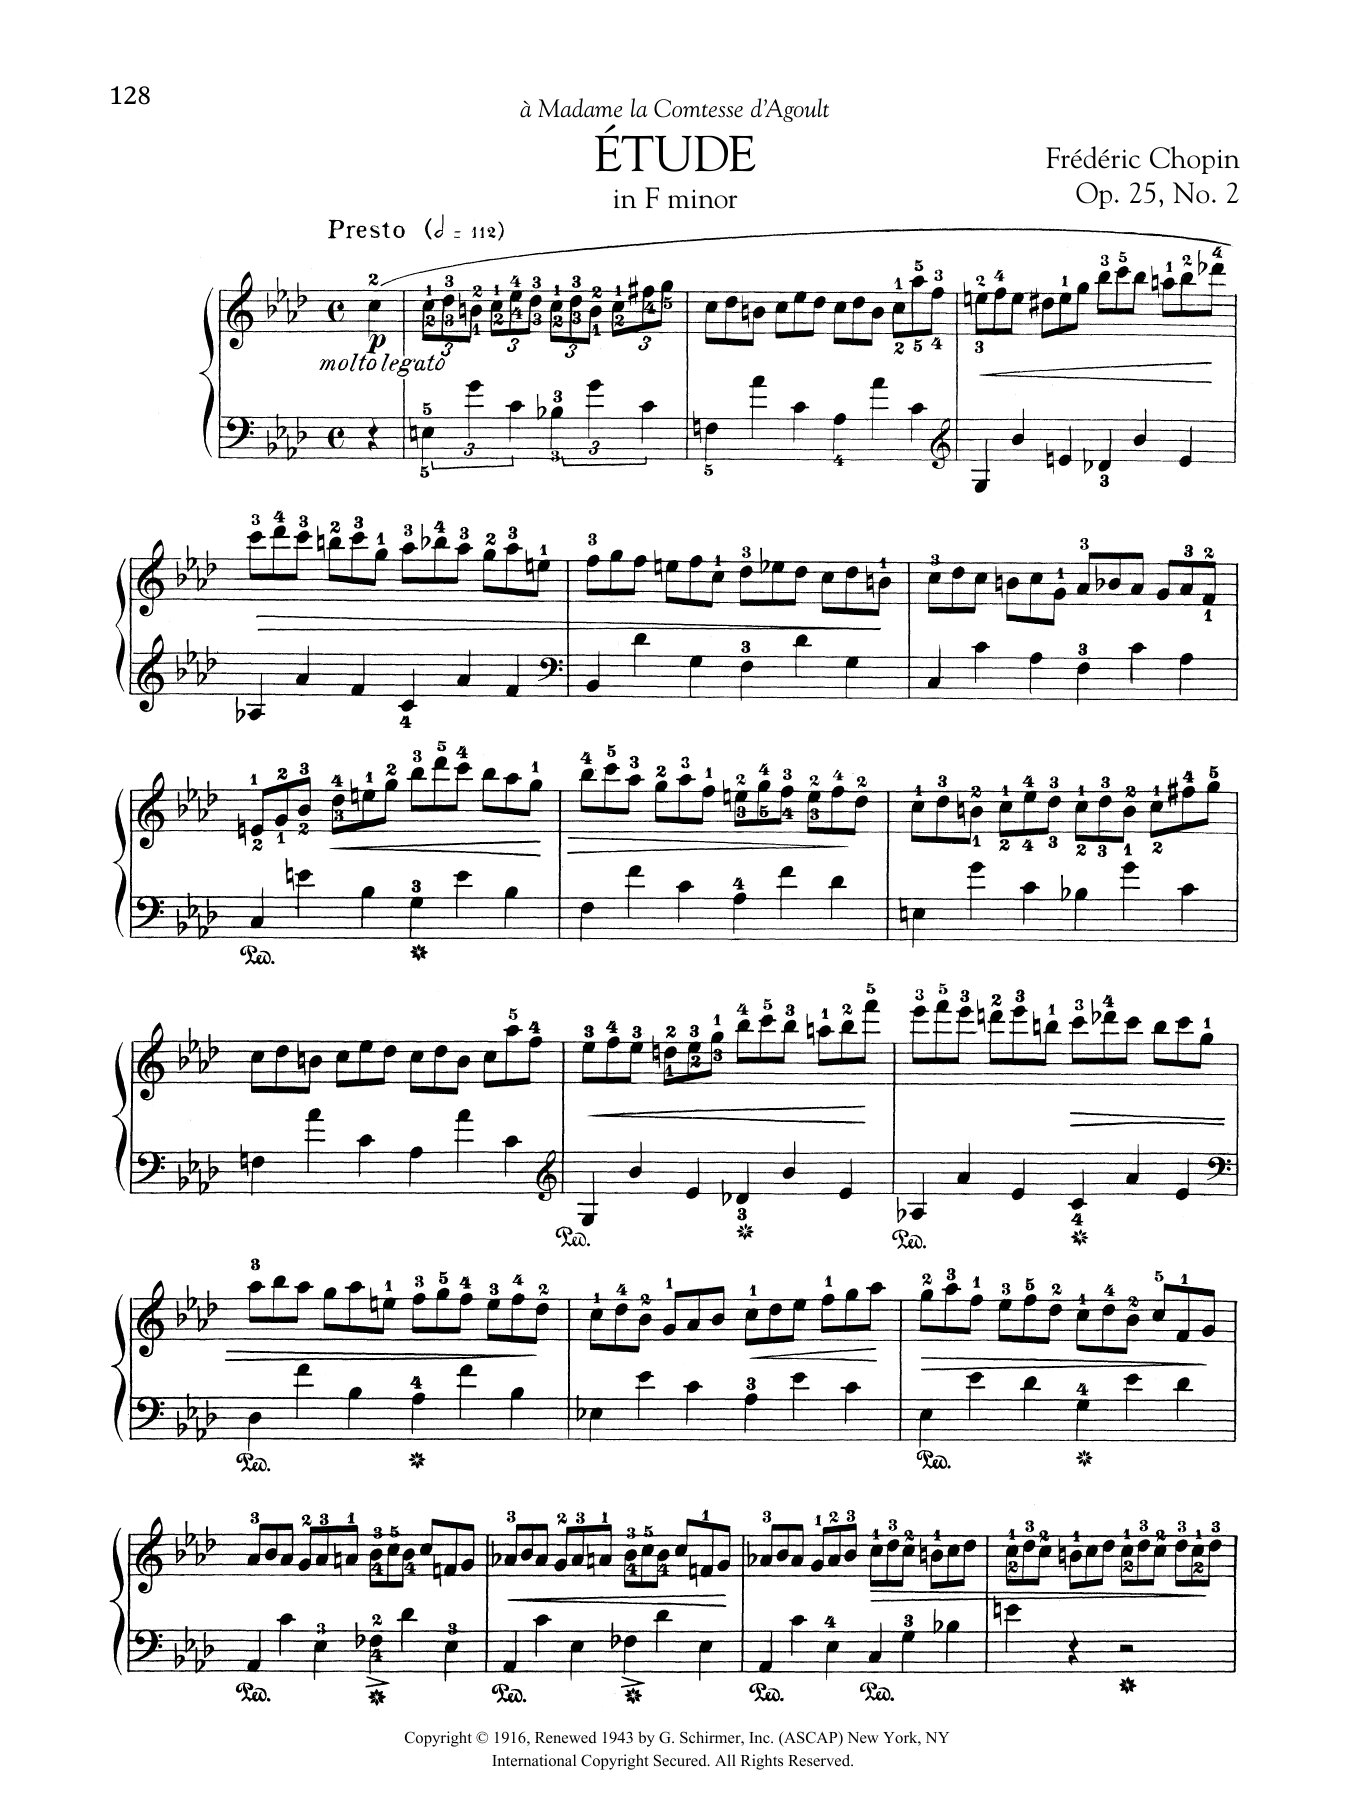 Download Frederic Chopin Etude in F minor, Op 25, No. 2 Sheet Music